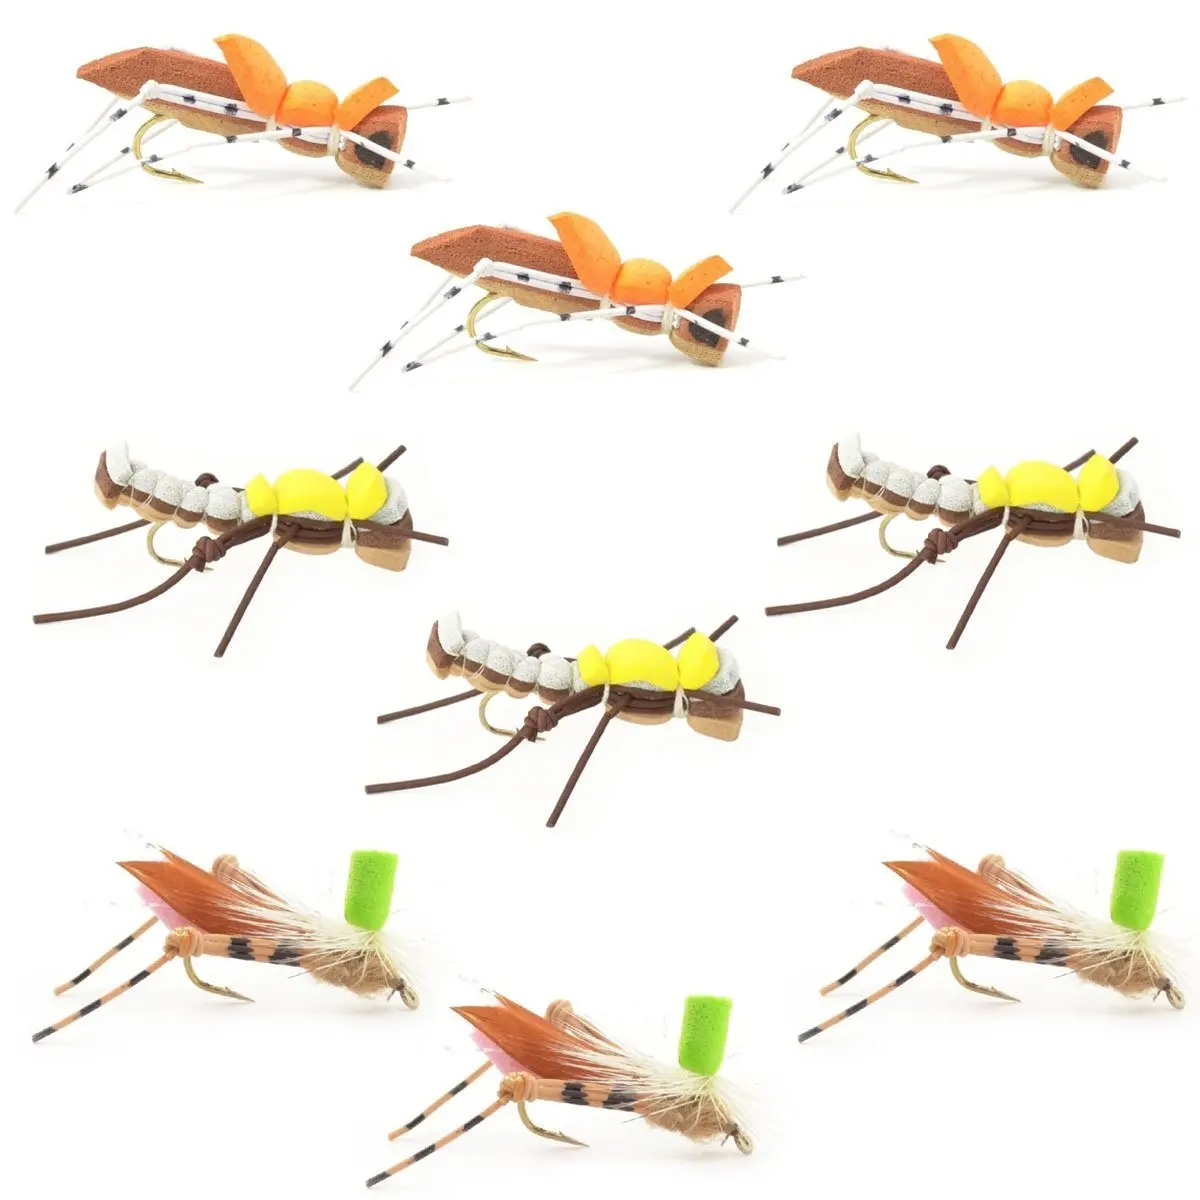 12 Dry Flies 4 Patterns Dry Flies For Stream Fly Fishing Dropper Hopper Foam Body Grasshopper Trout Flies Assortment